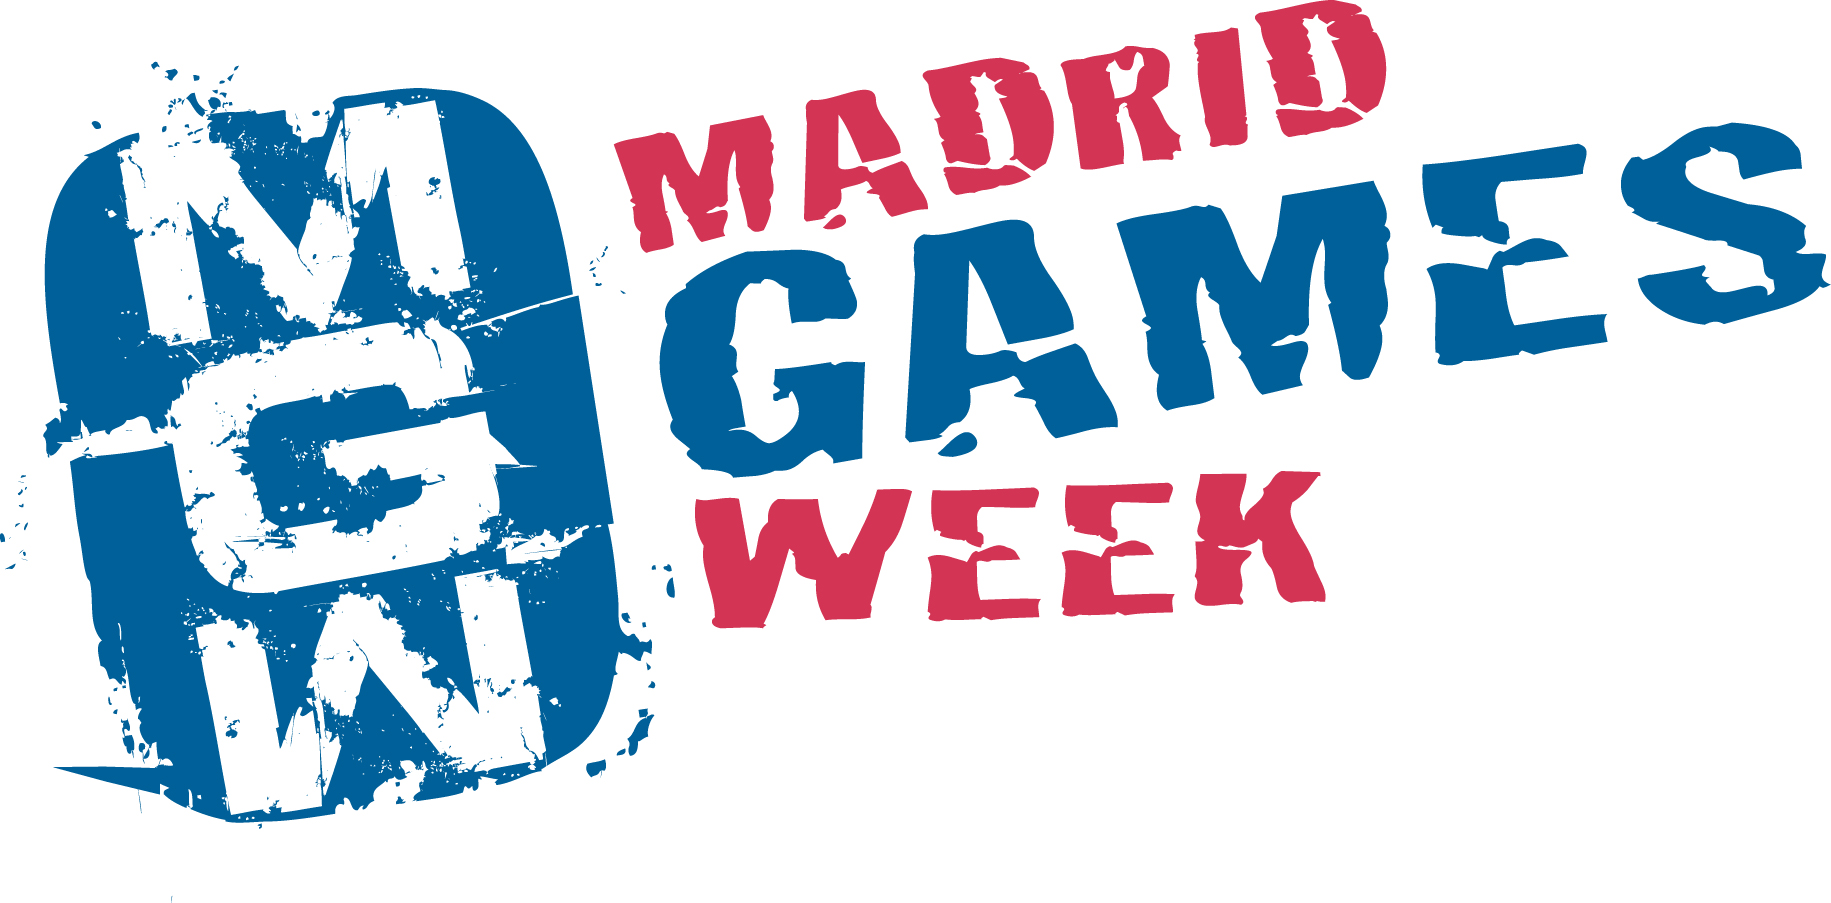 Comienza la Madrid Games Week